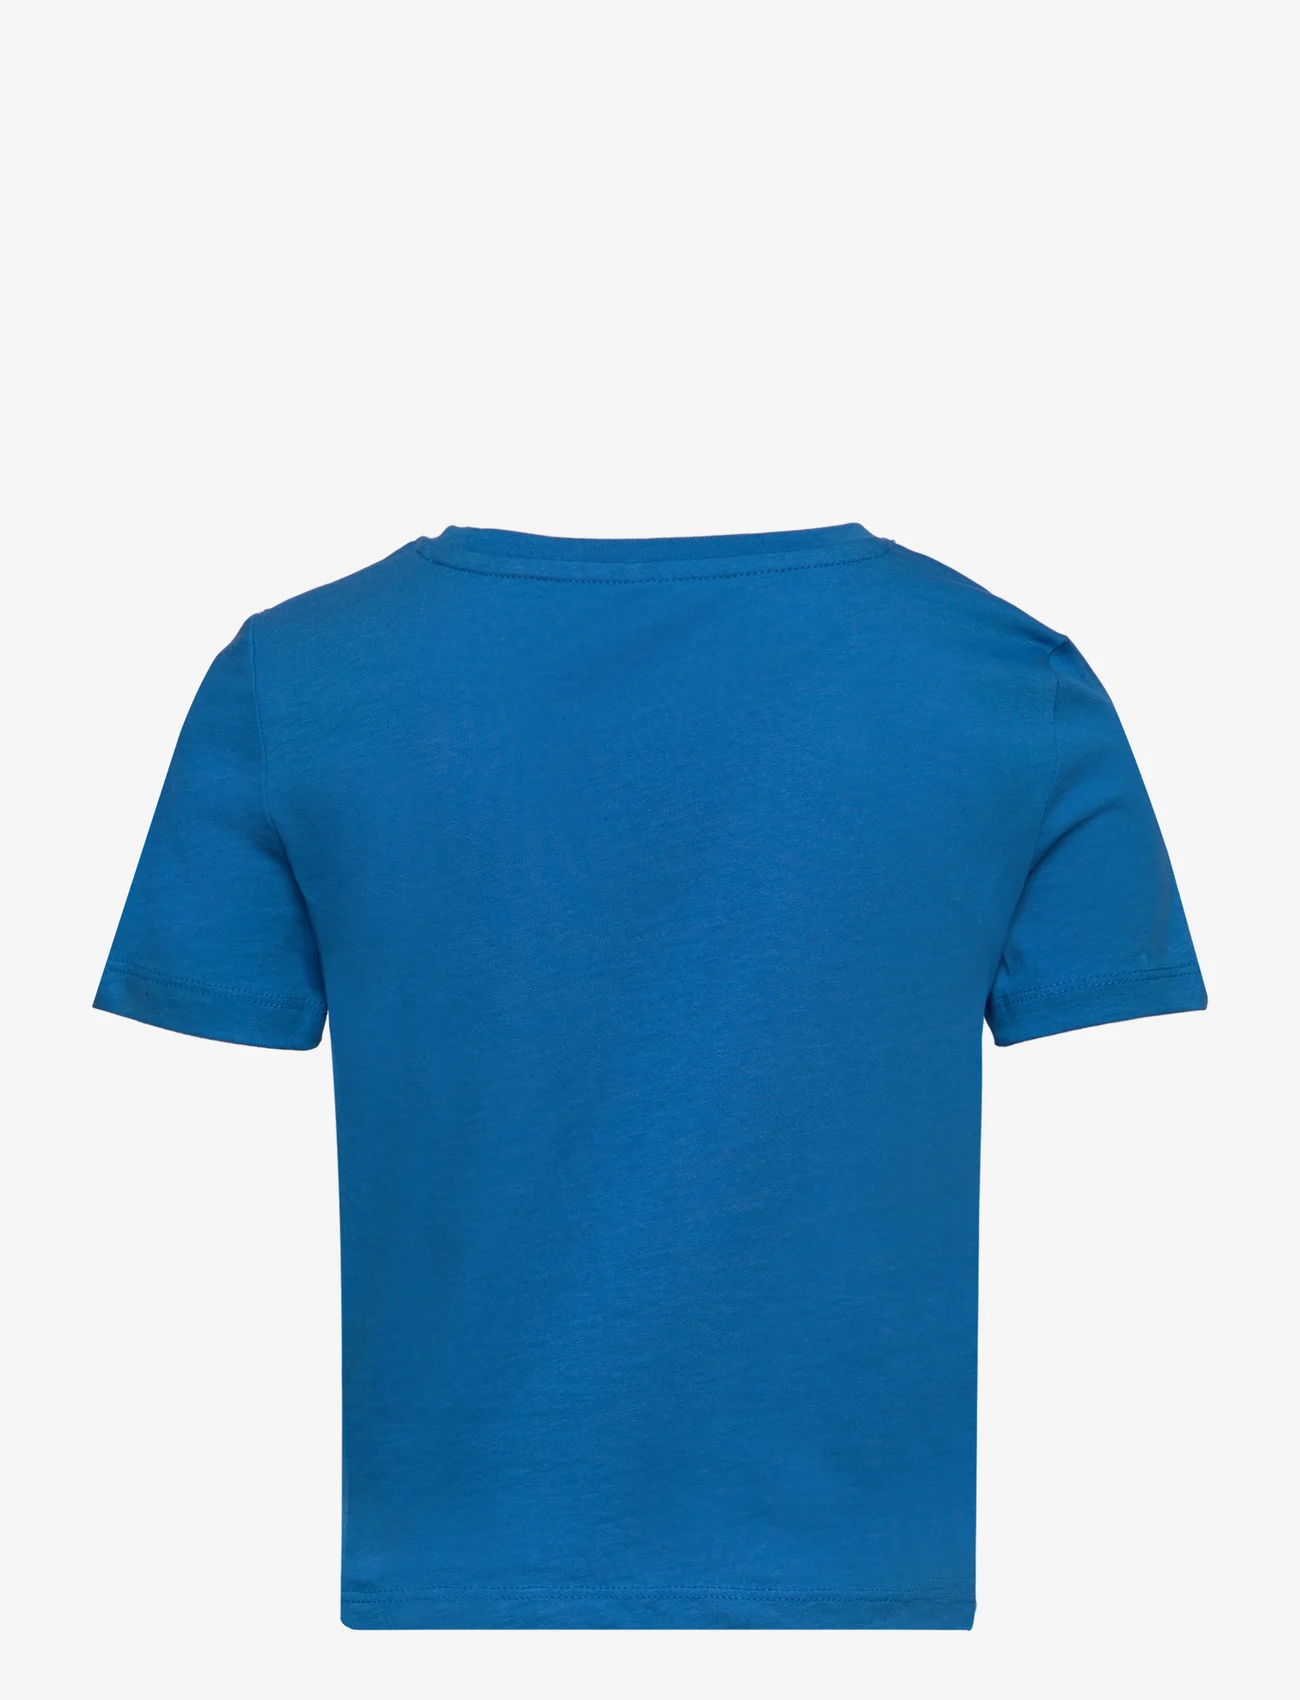 Kids Only - KOGNEW MAY LIFE S/S KNOT TOP JRS - marškinėliai trumpomis rankovėmis - french blue - 1